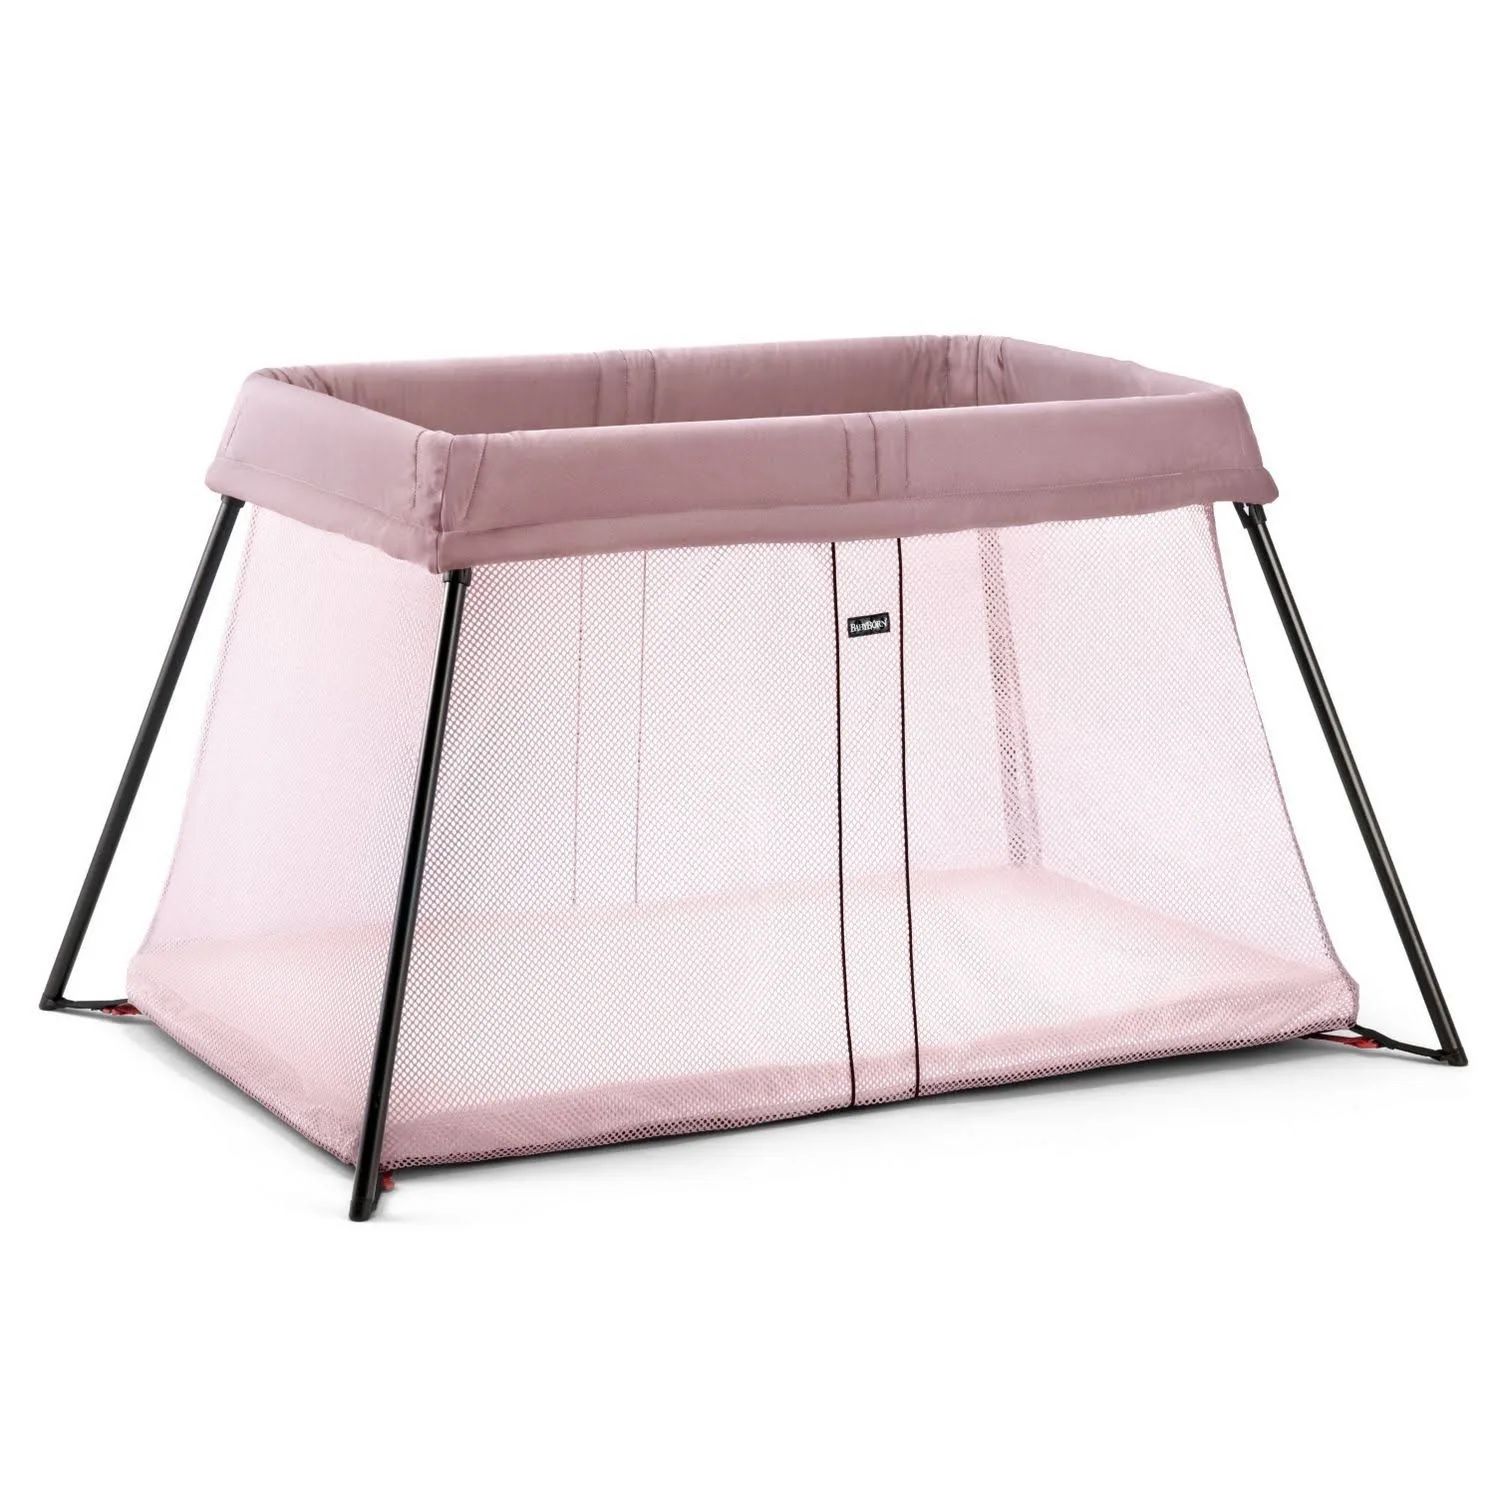 BabyBjorn Travel Crib Light - Pink